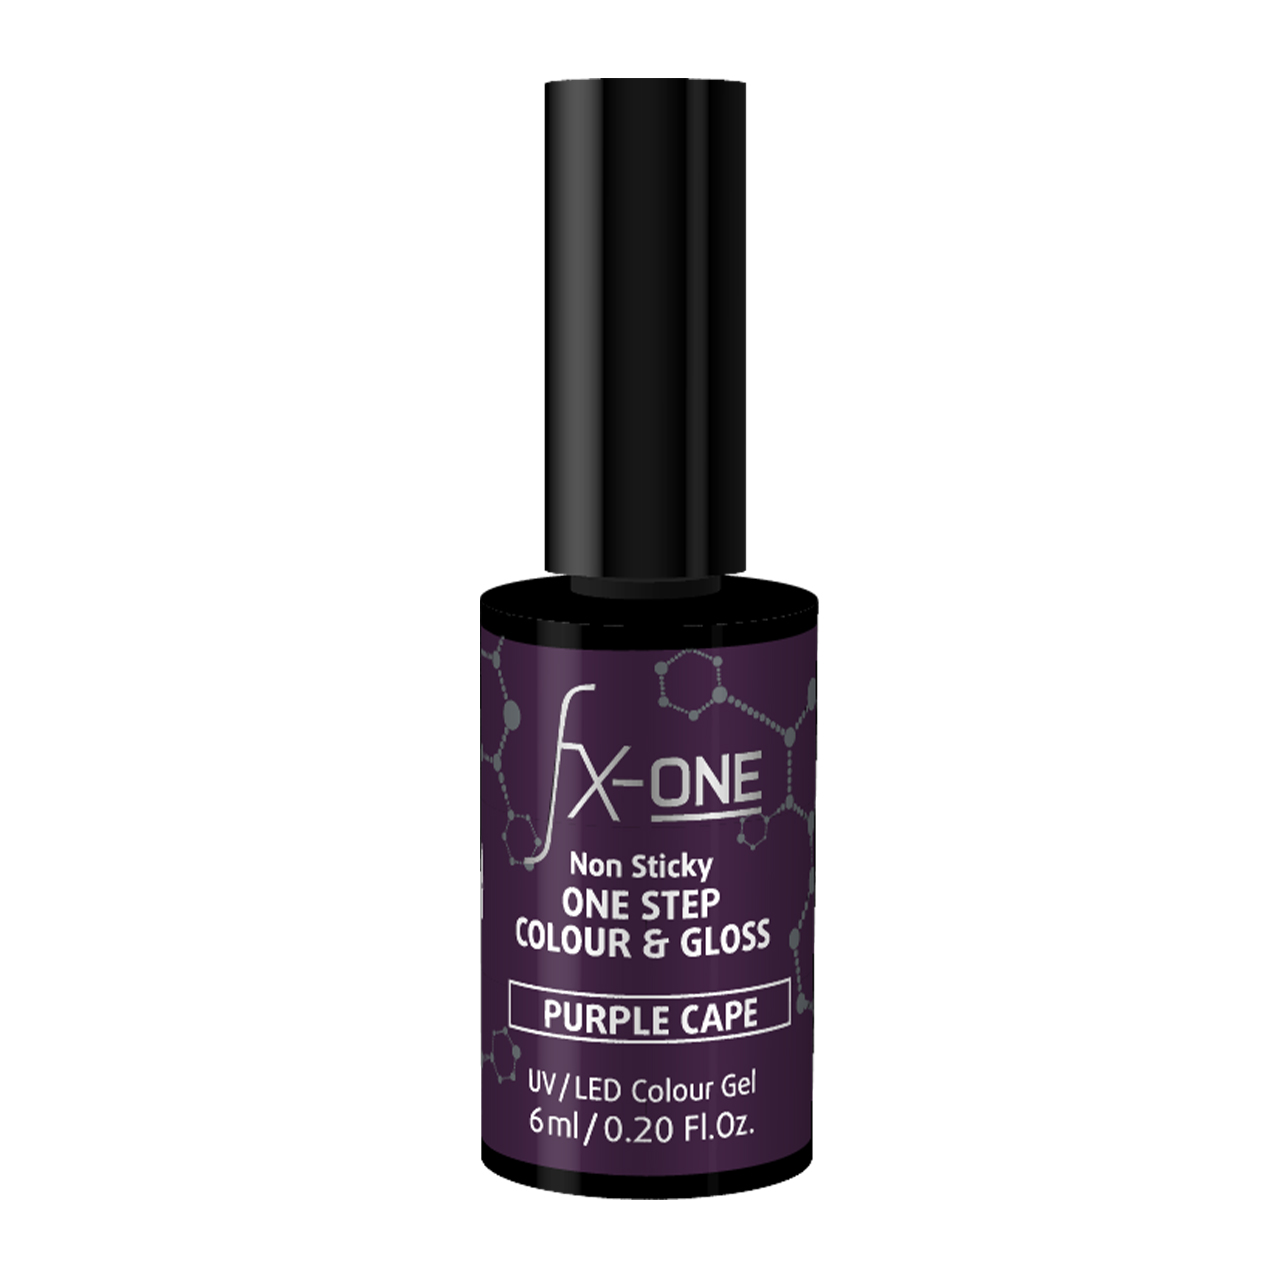 FX-One Colour & Gloss Purple Cape